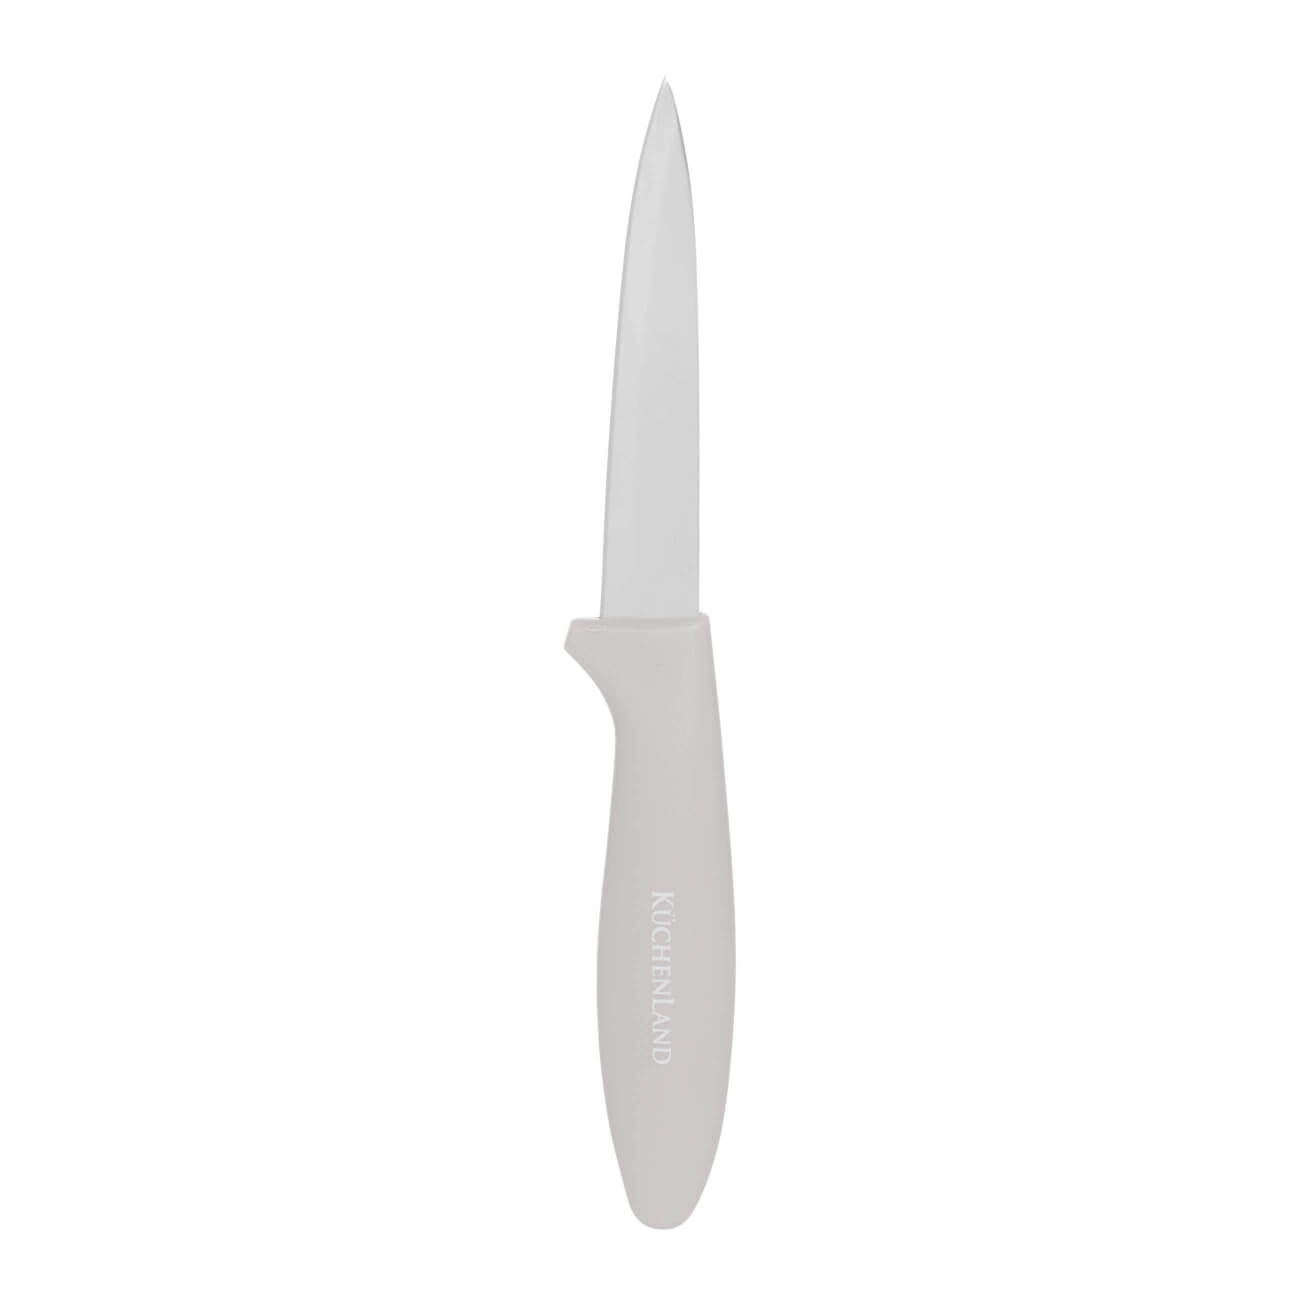 Нож для чистки овощей, 9 см, сталь/пластик, серо-коричневый, Regular kuchenland нож для чистки овощей 10 см сталь пластик select